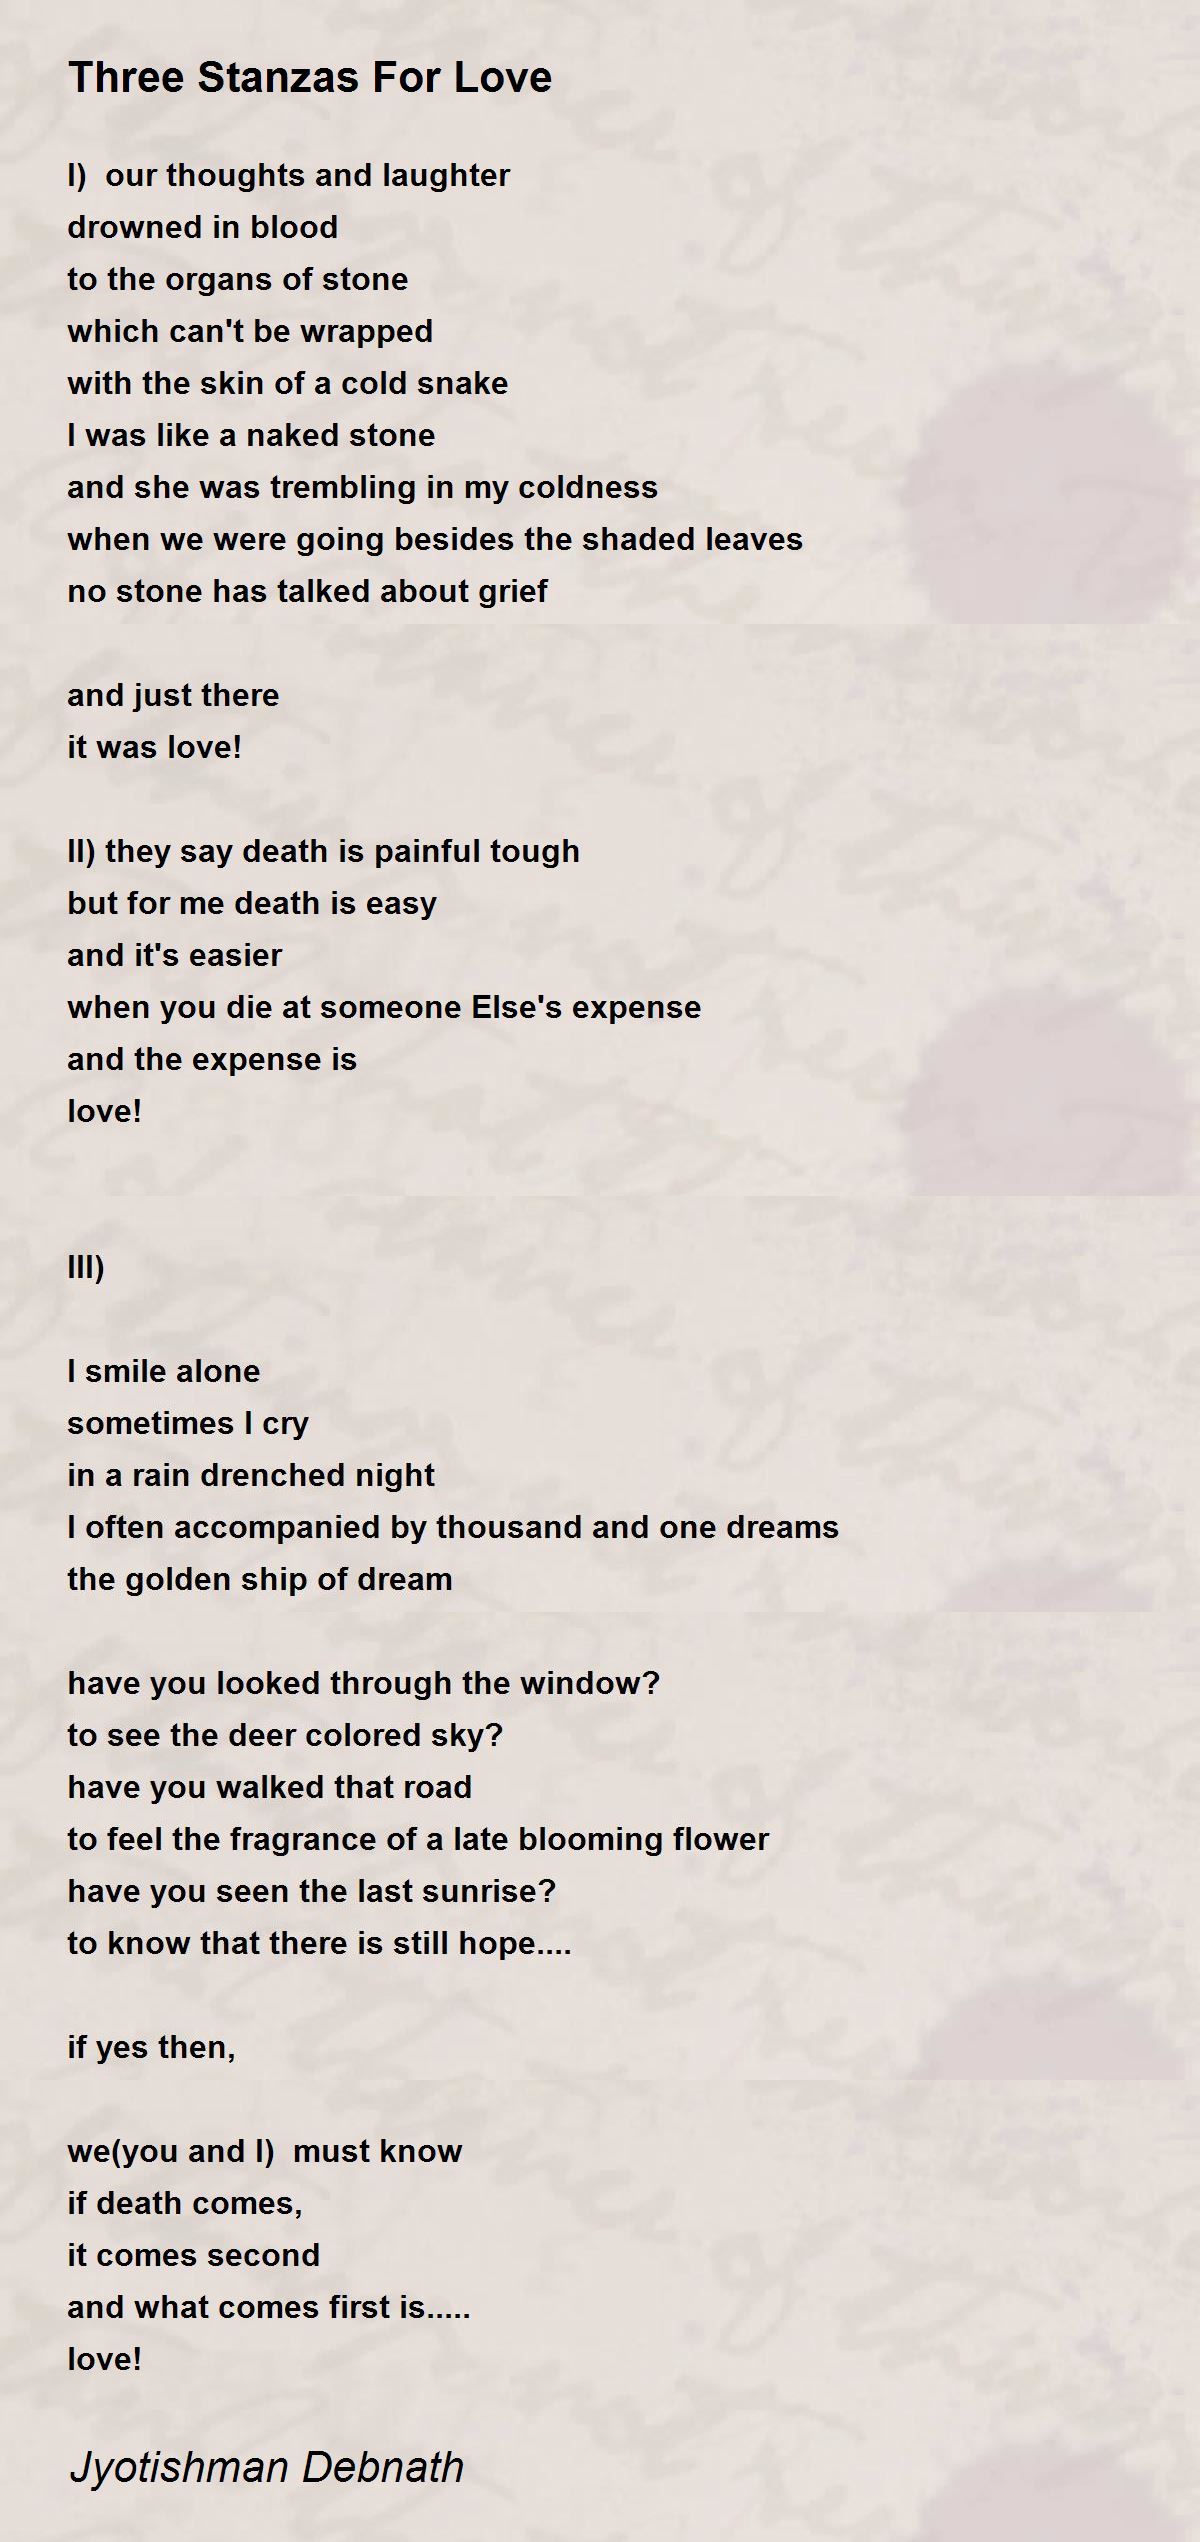 Three Stanzas For Love - Three Stanzas For Love Poem by Jyotishman Debnath